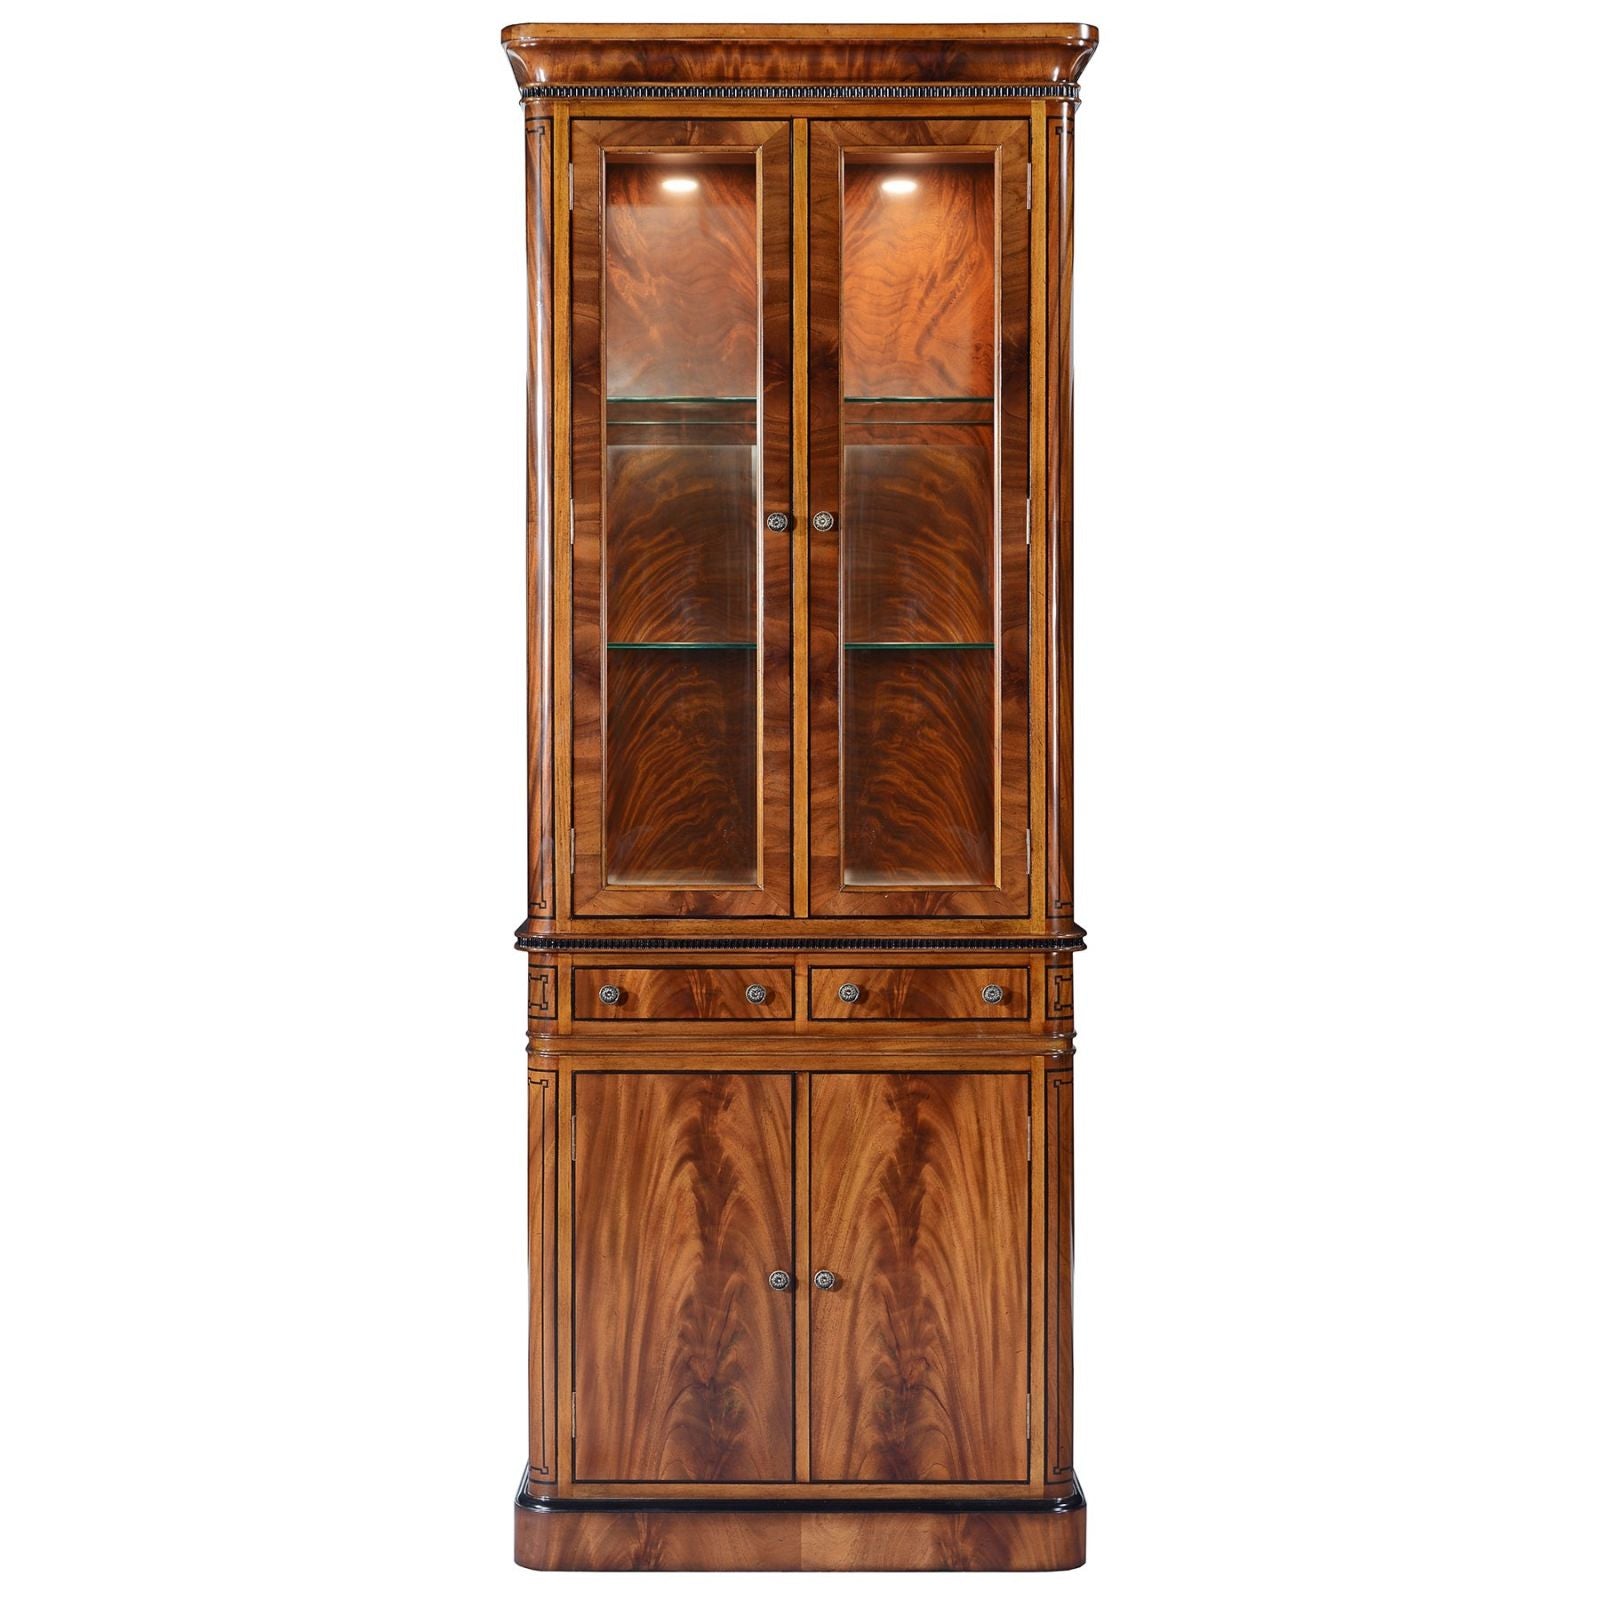 Thomas Hope style two door mahogany display cabinet